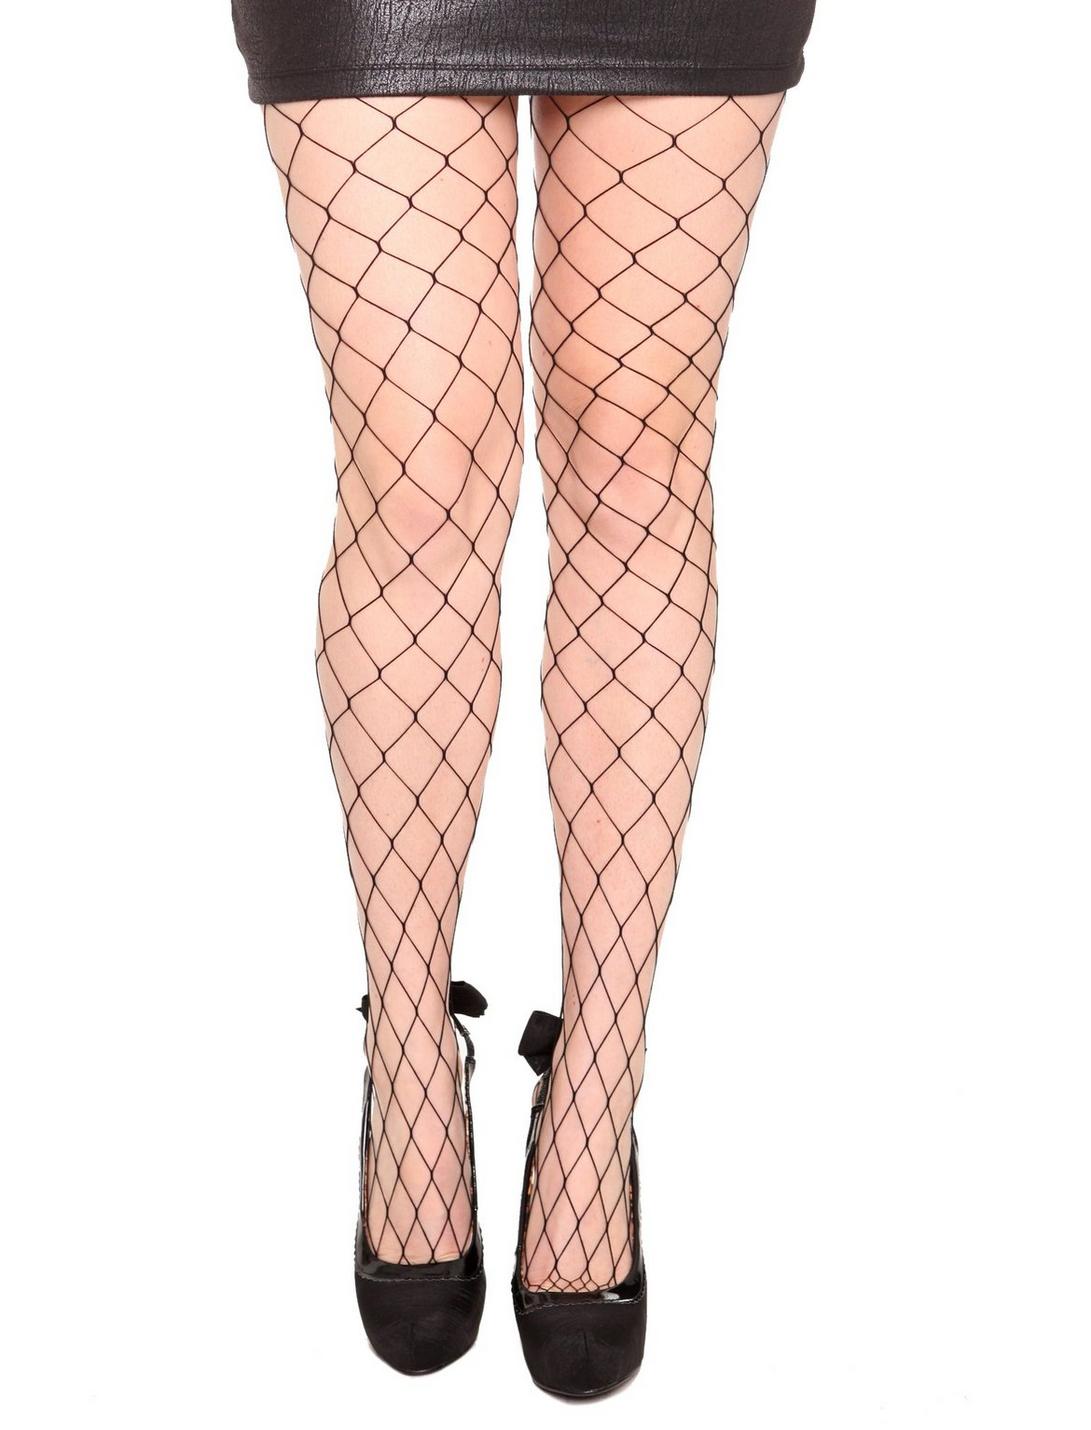 Women's Faux Knee High Black Stockings Diamond Net Fishnet Tights Full Pantyhose